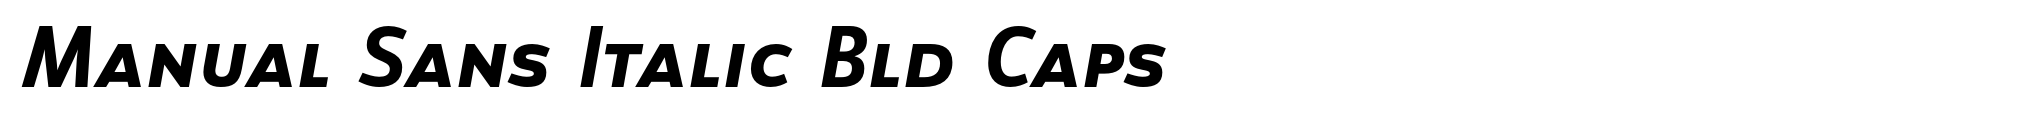 Manual Sans Italic Bld Caps image